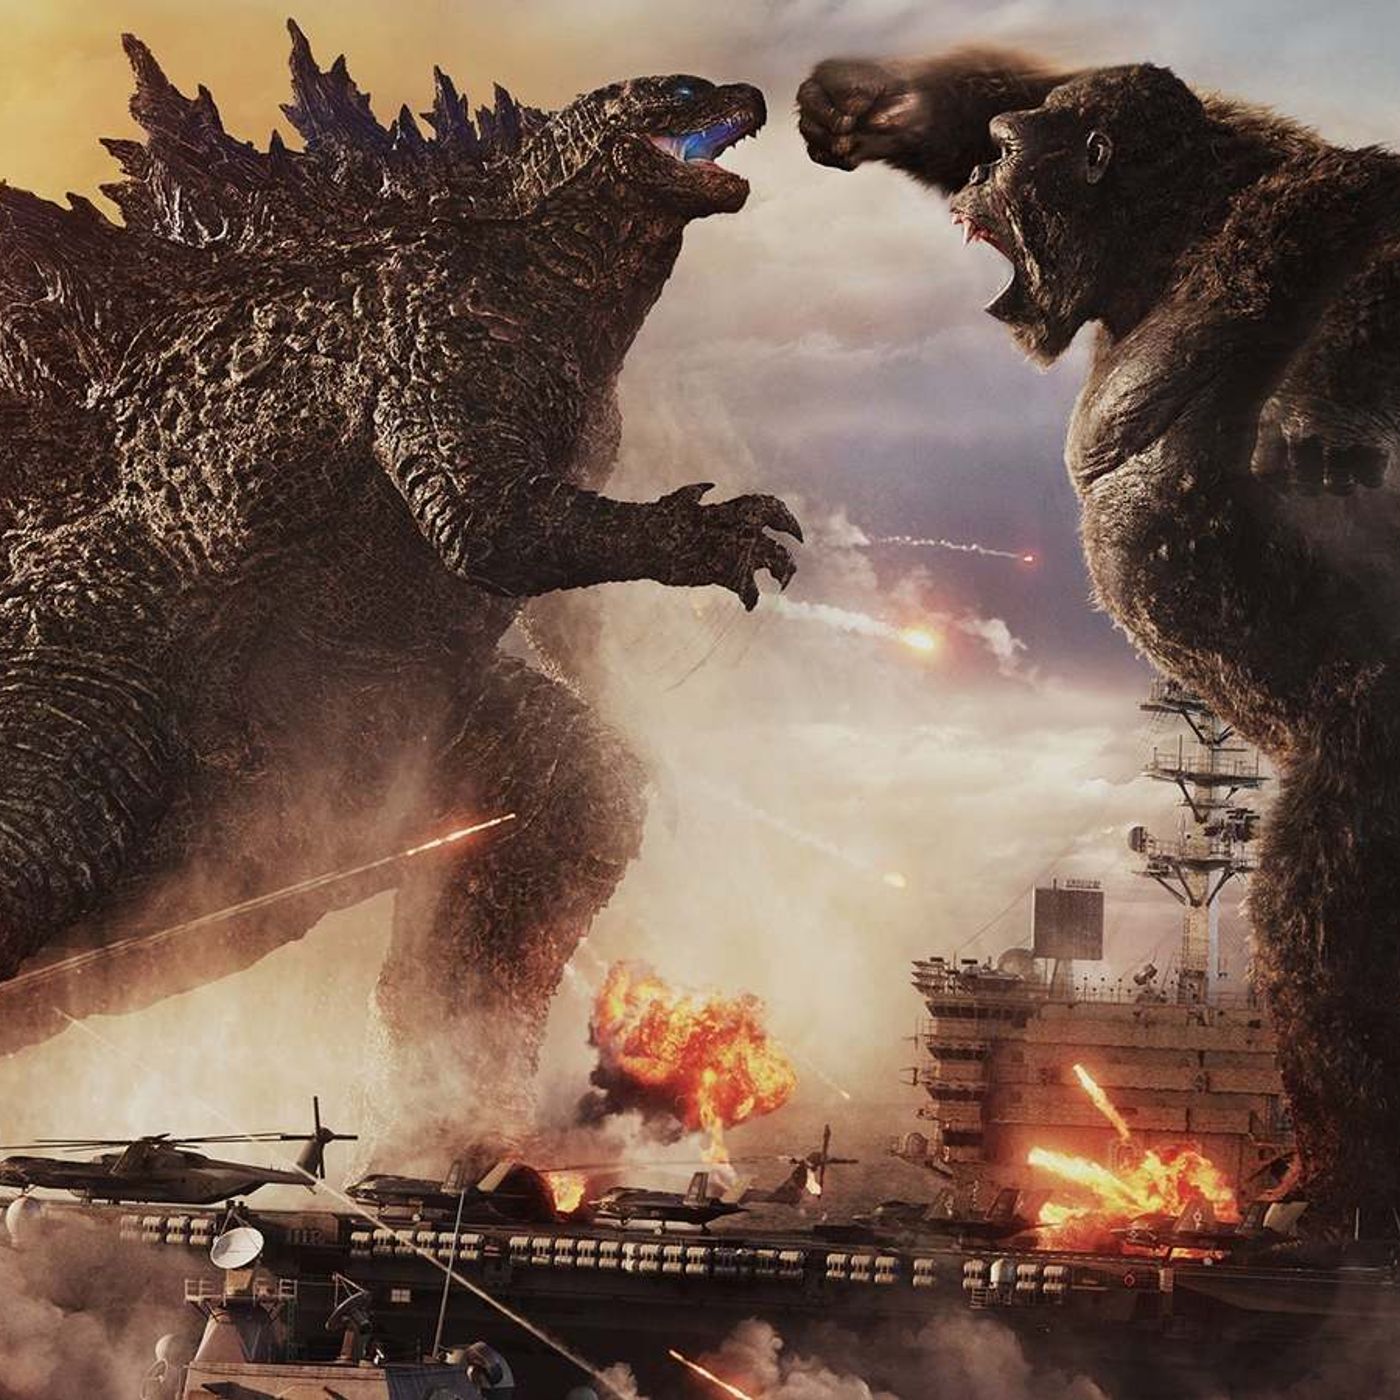 Ep. 613 - Godzilla vs. Kong (GUEST: Max Evry from ComingSoon.net)